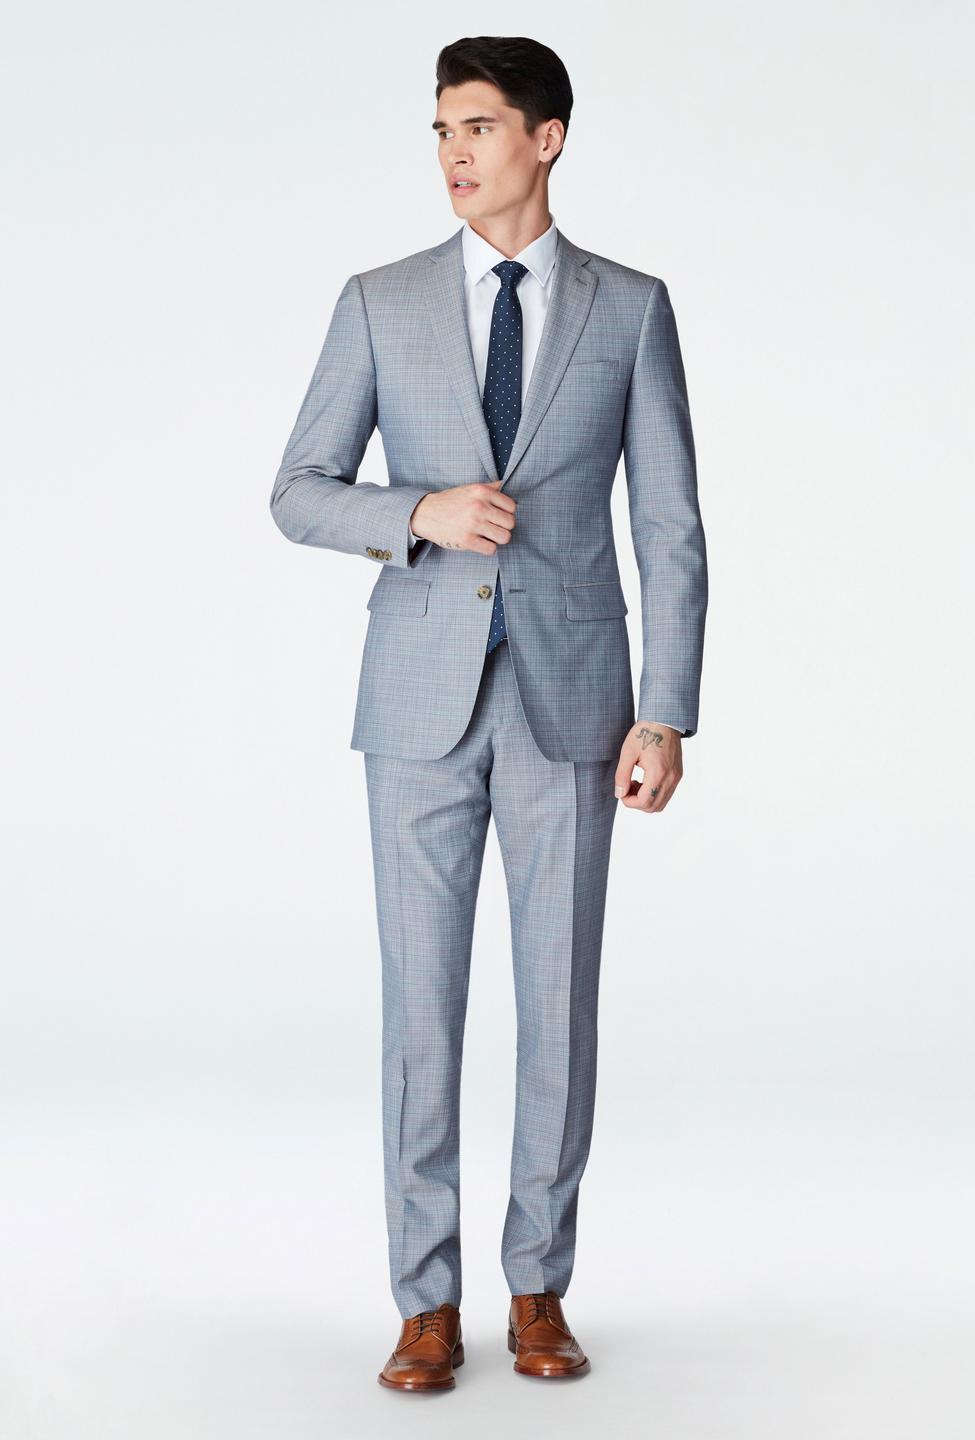 Chorley Plaid Gray Suit